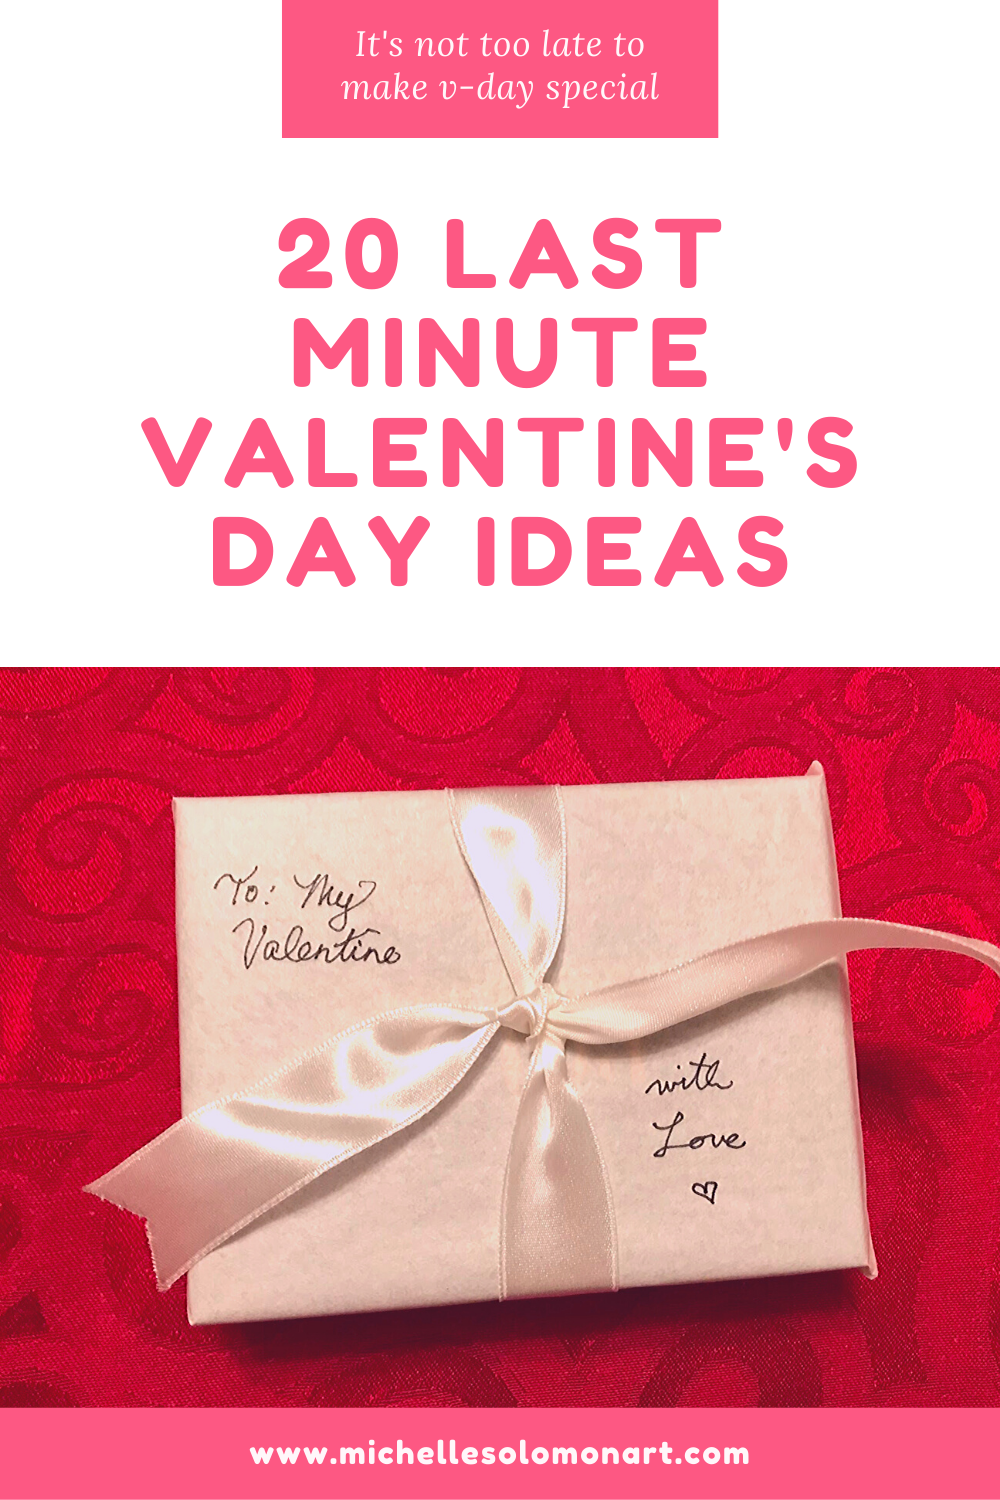 20 Last Minute Valentine's Day Ideas (many free!)